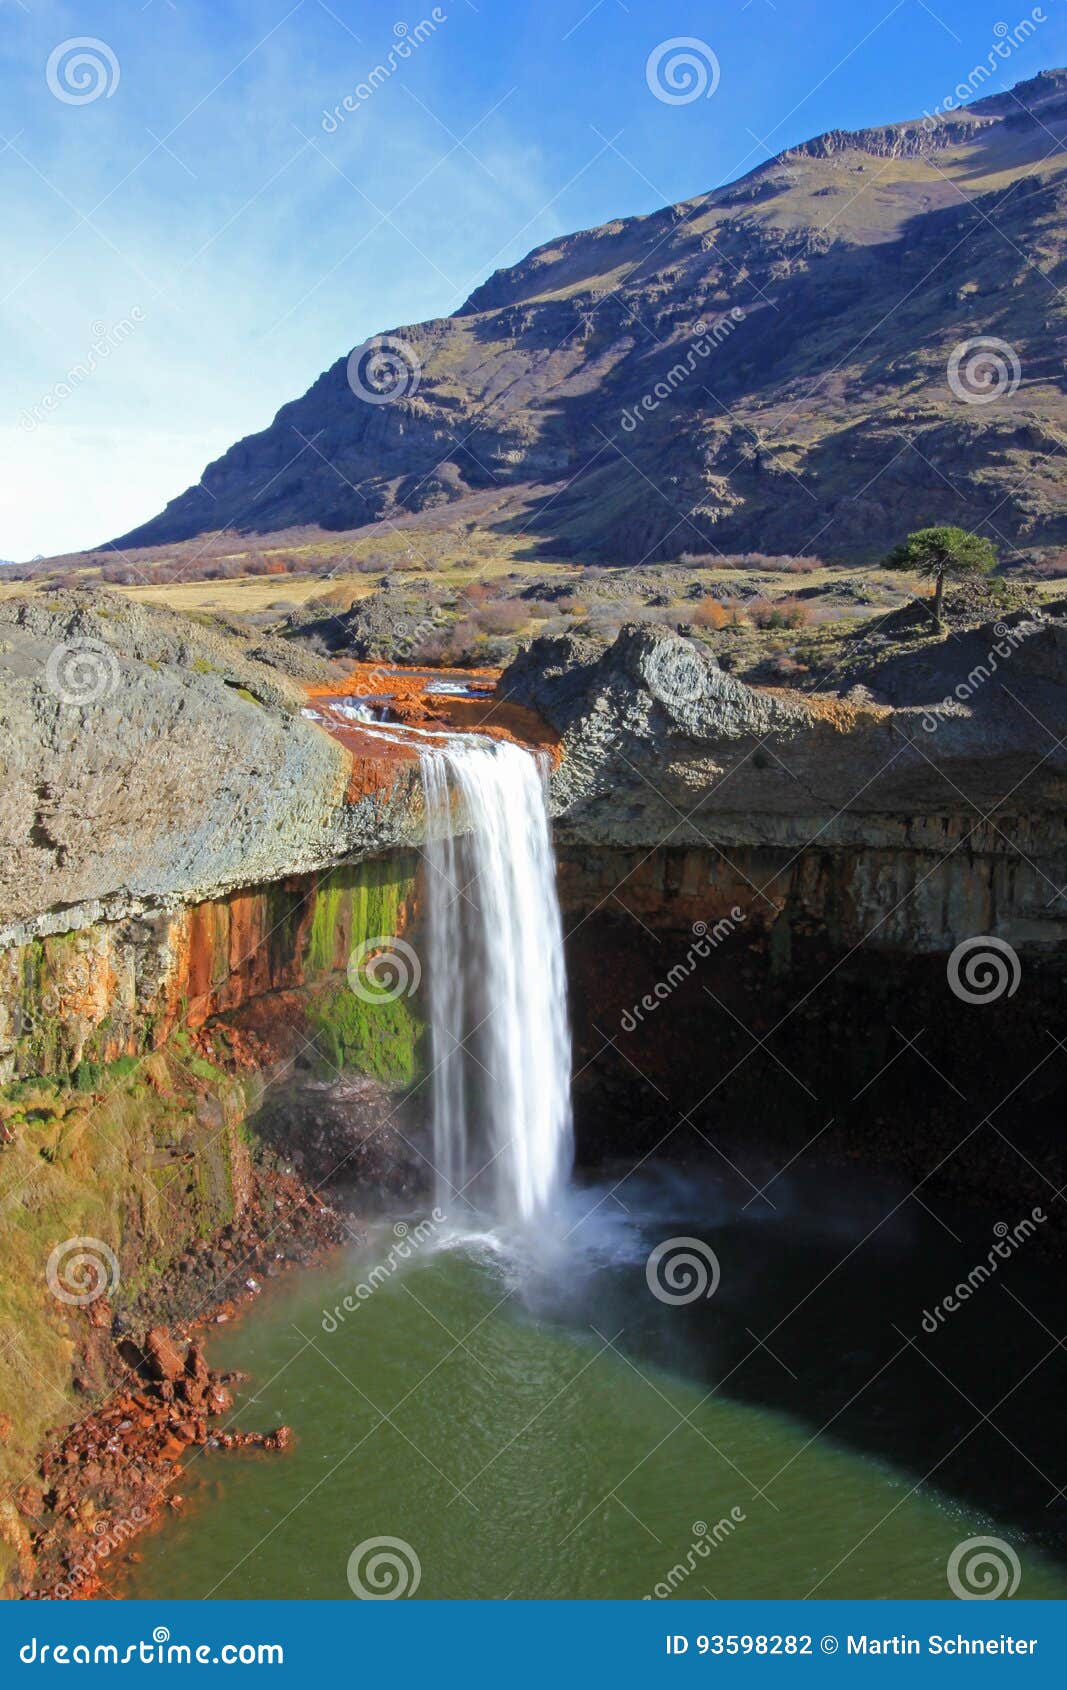 waterfall salto del agrio, argentina